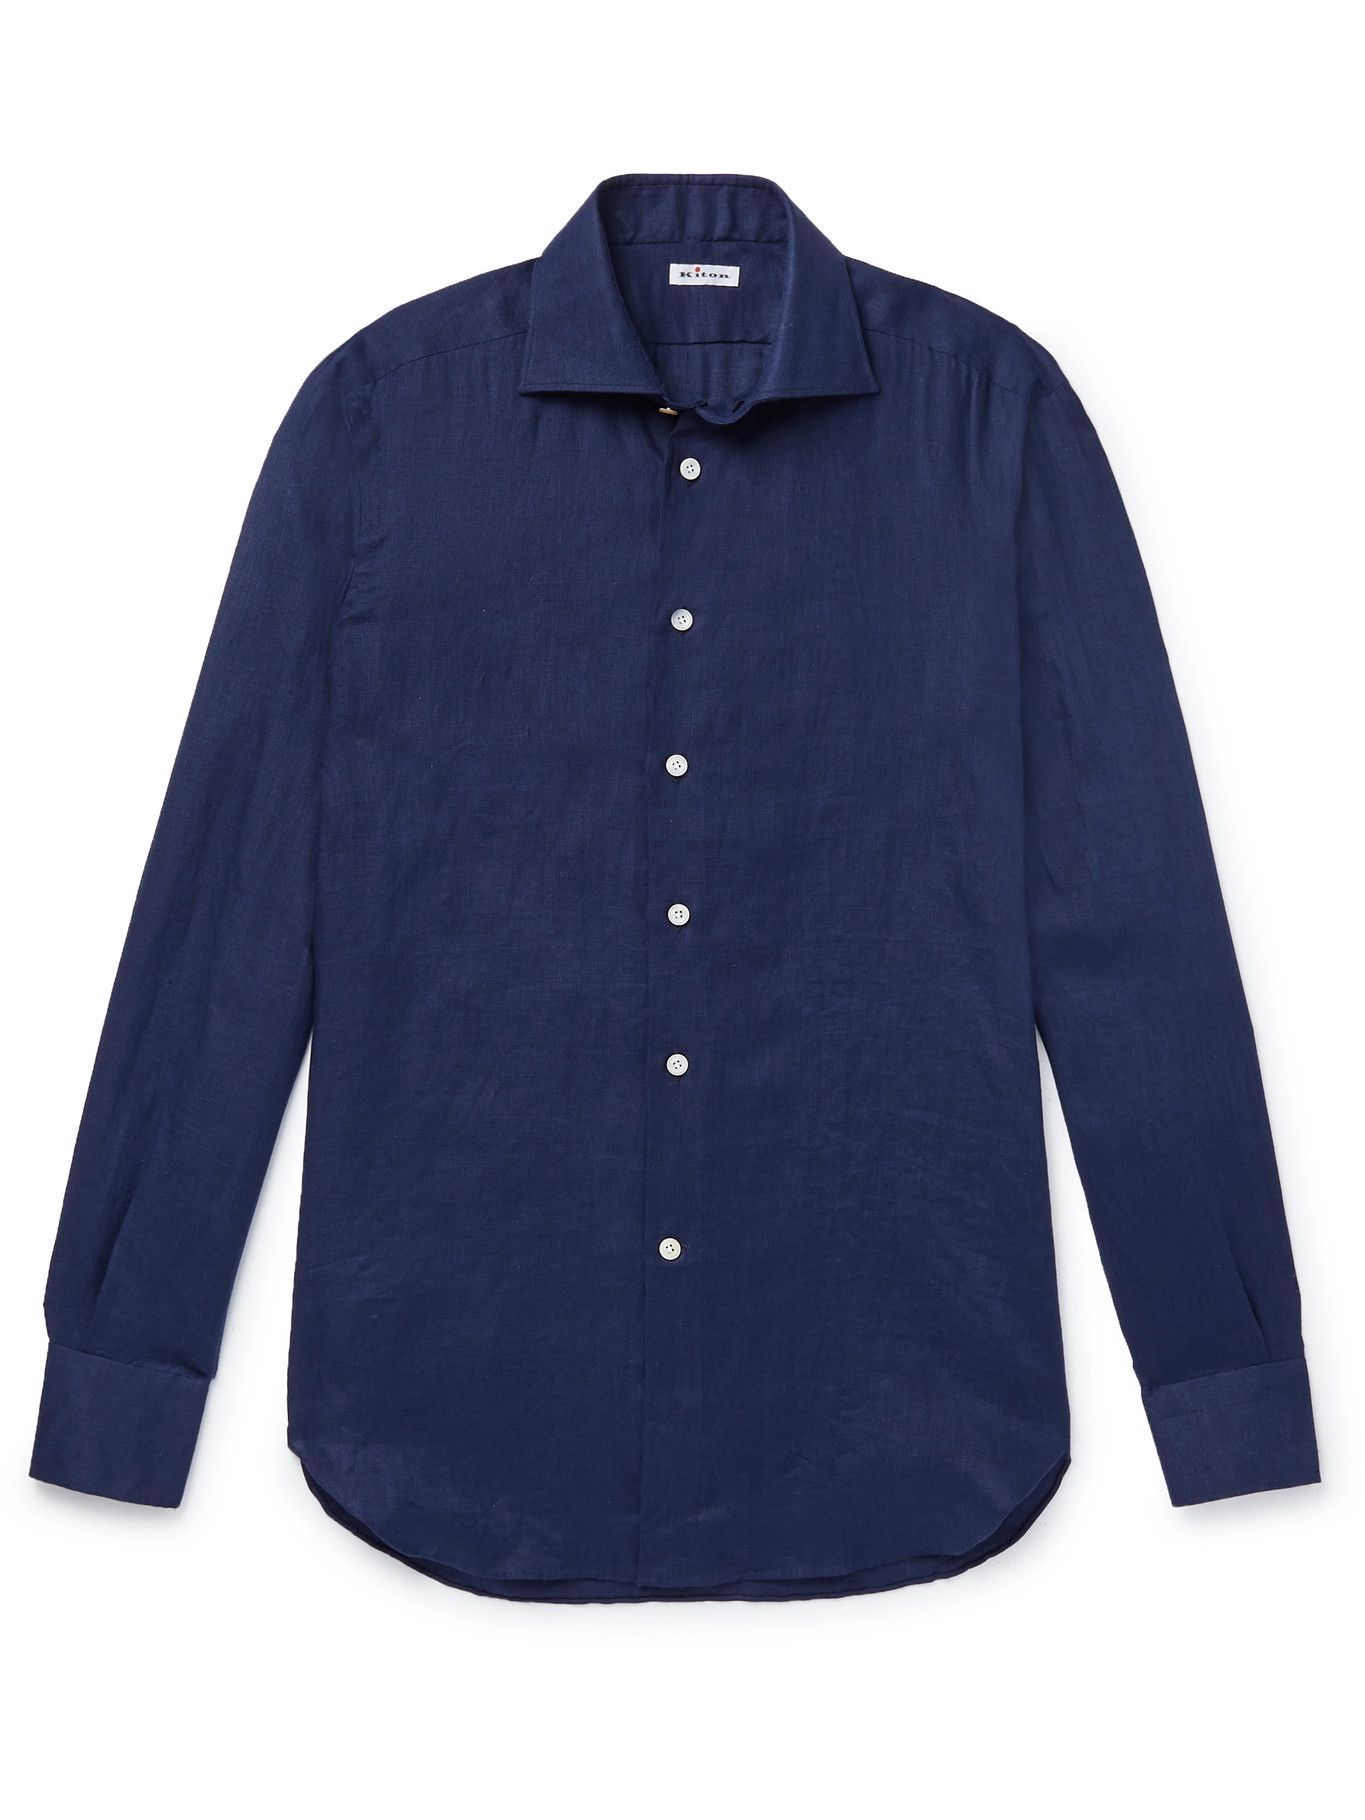 KITON - Linen Shirt - Blue Kiton